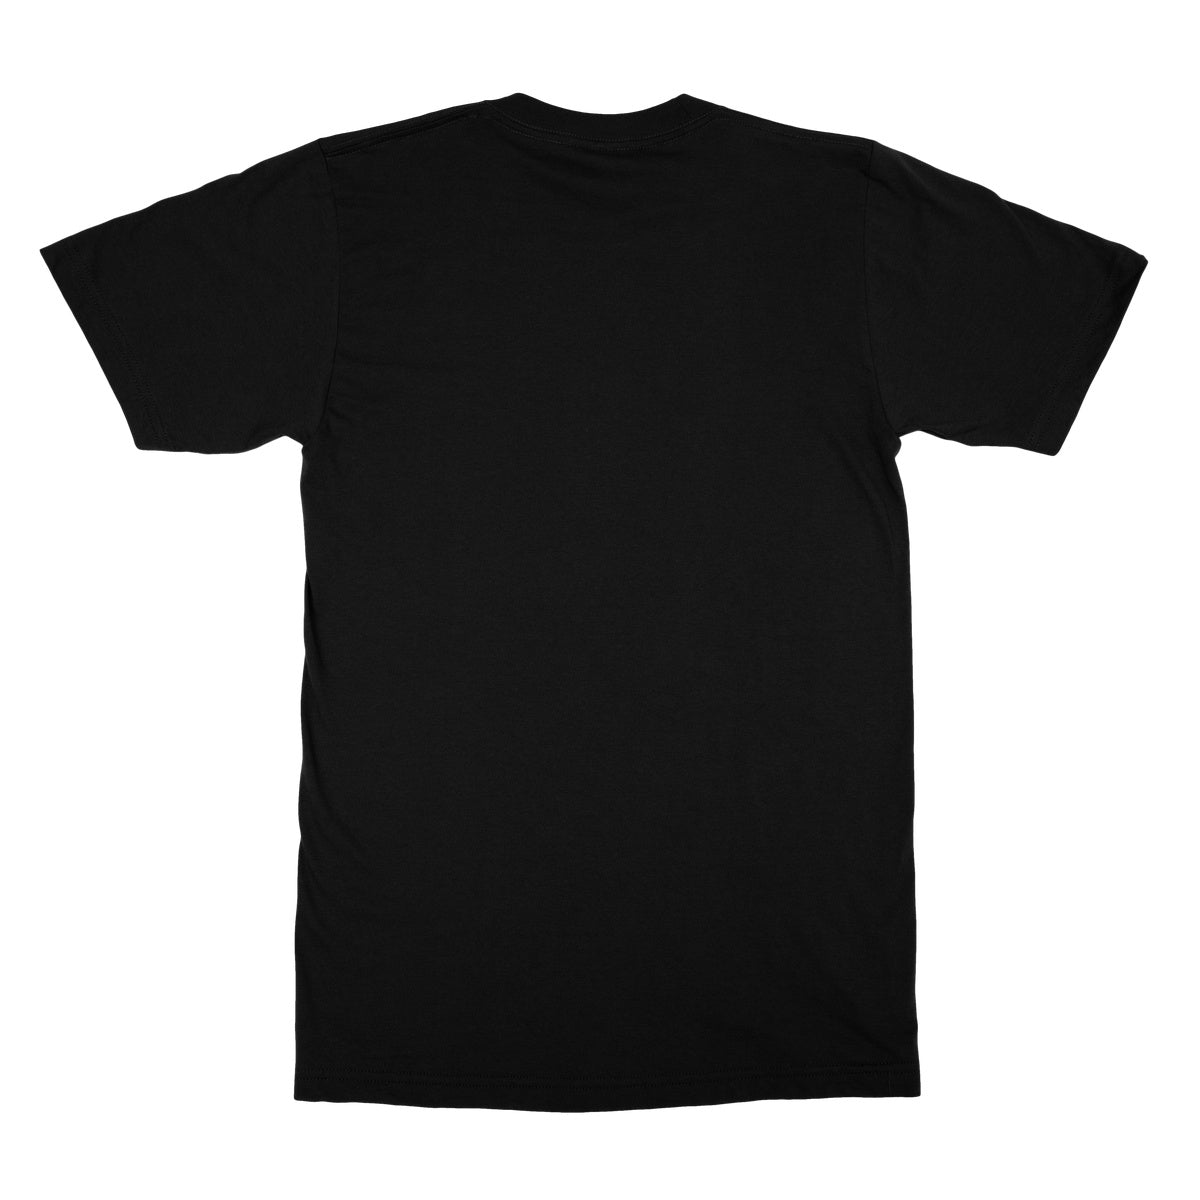 Terminator Illustrated Softstyle T-Shirt